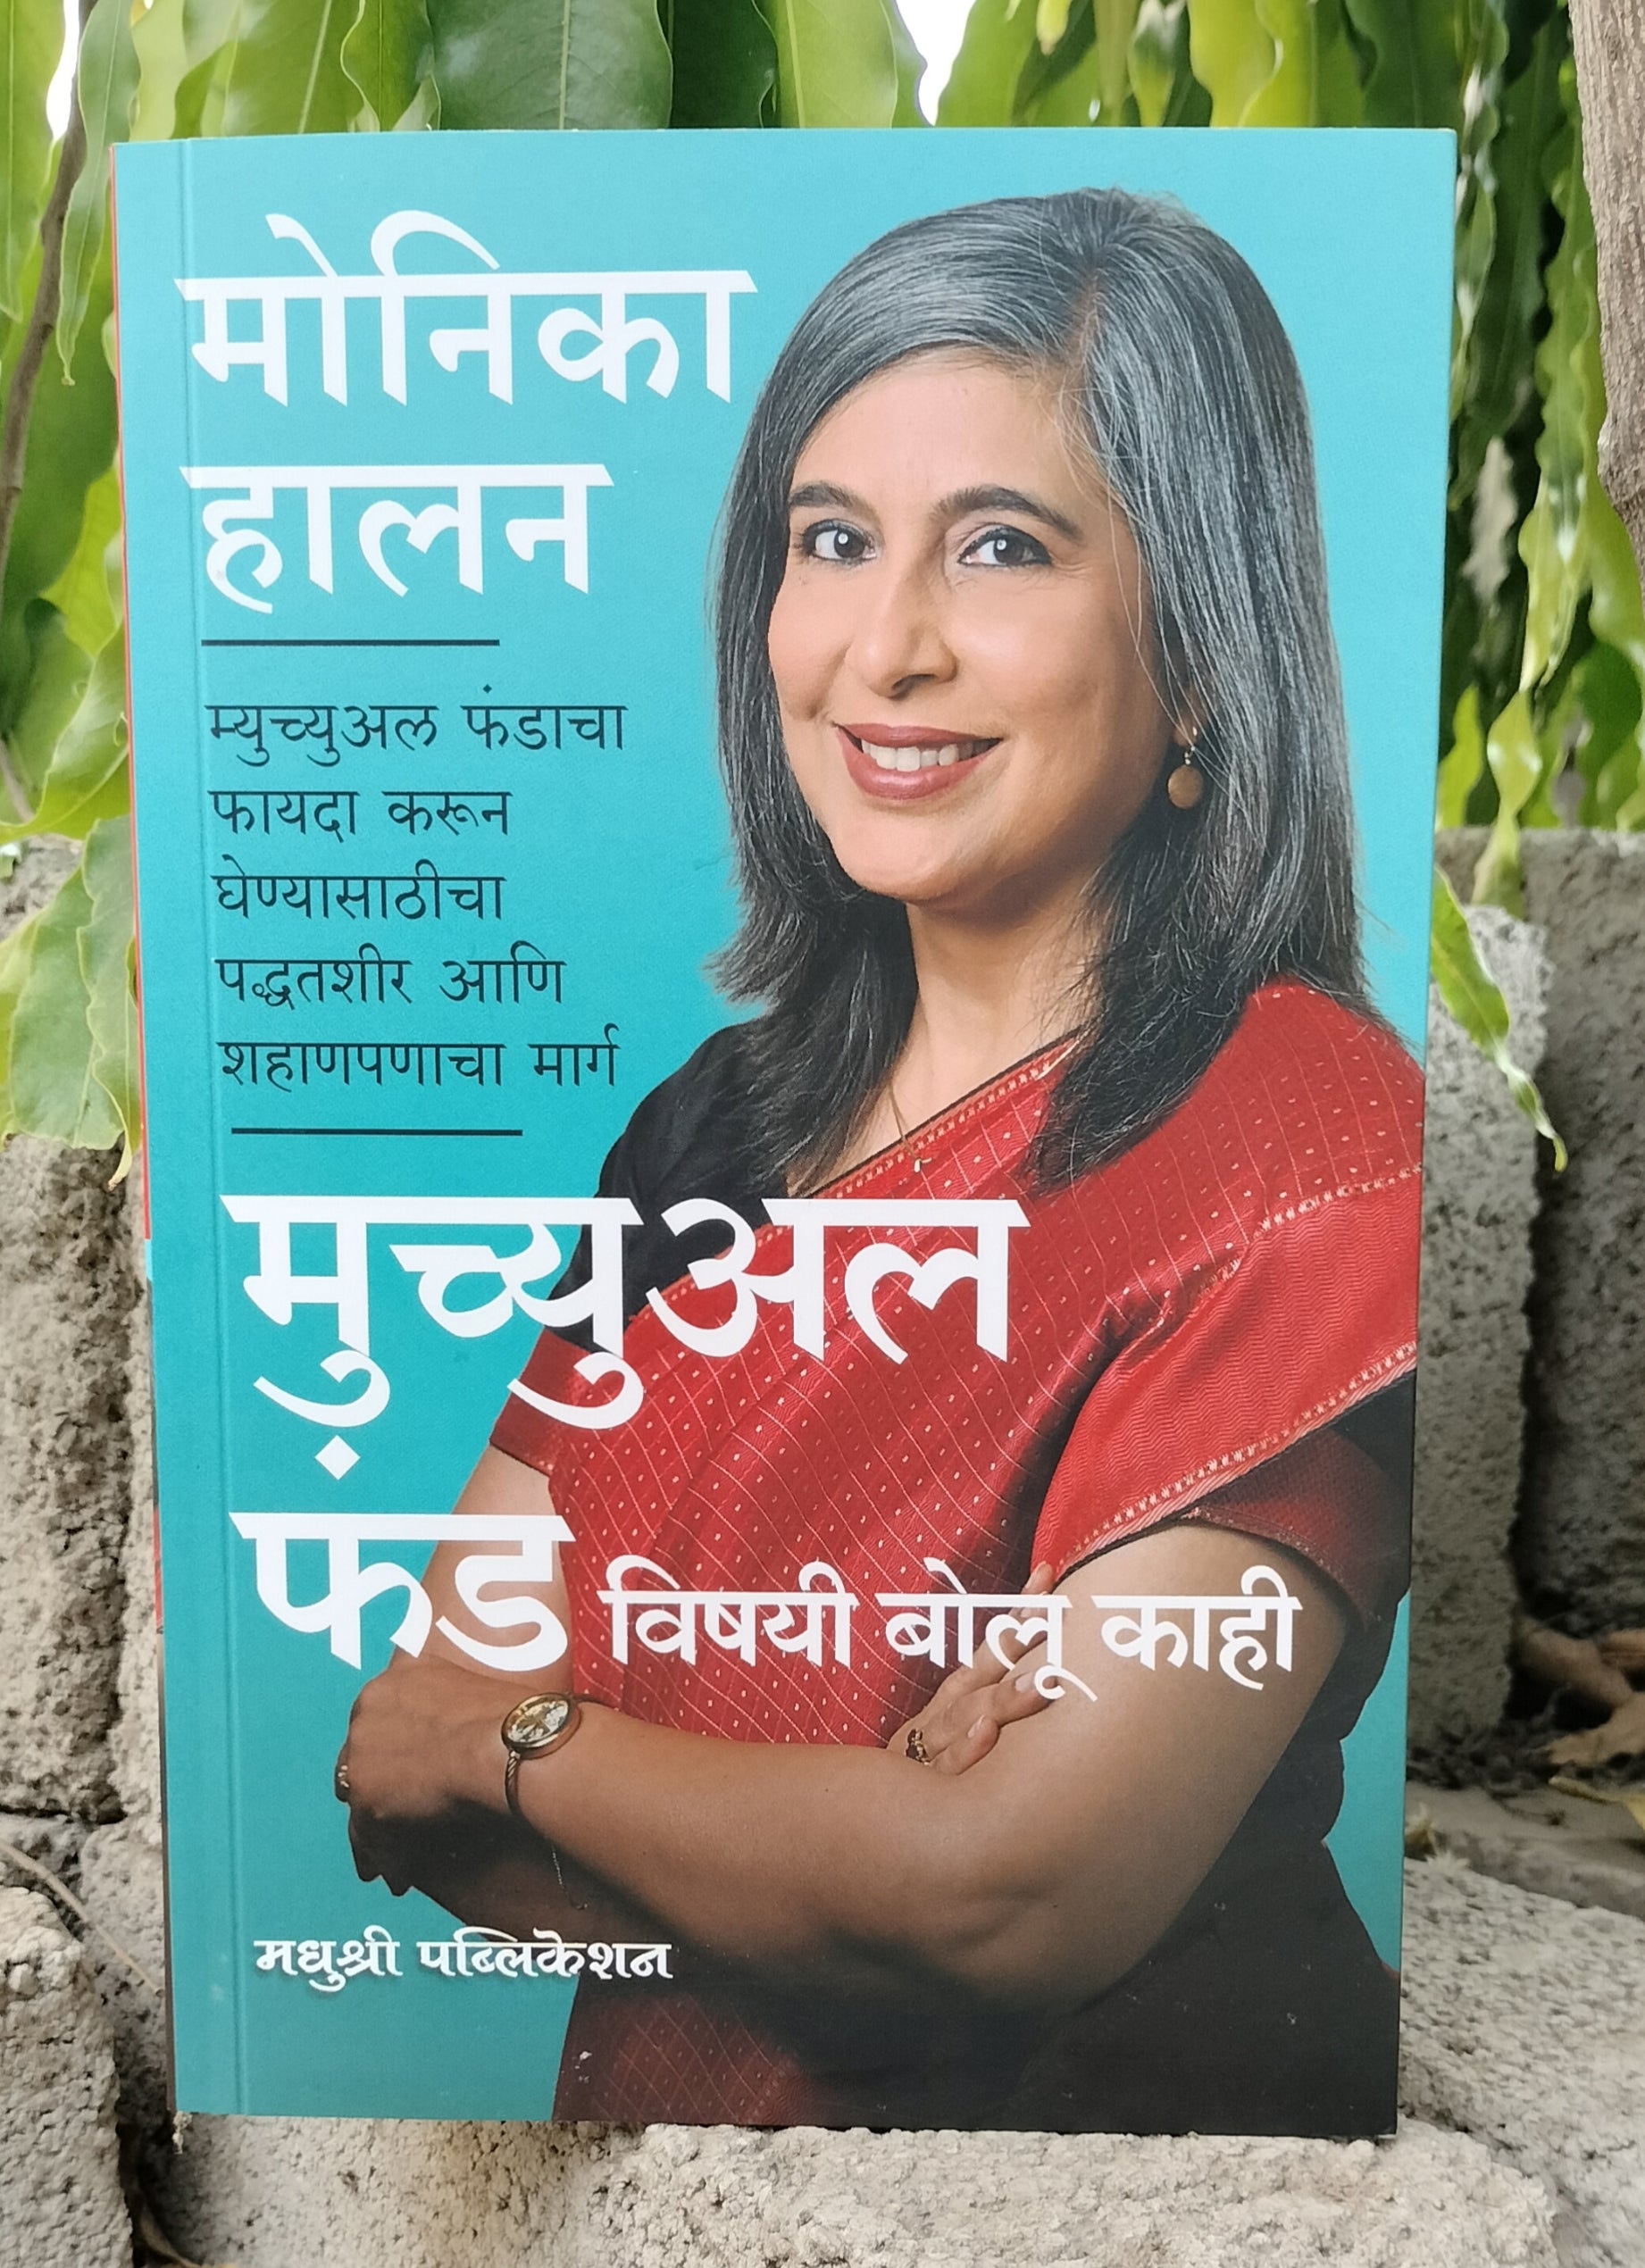 Mutual Fund Vishayi Bolu kahi Marathi Book By Monika Halan  Front Page